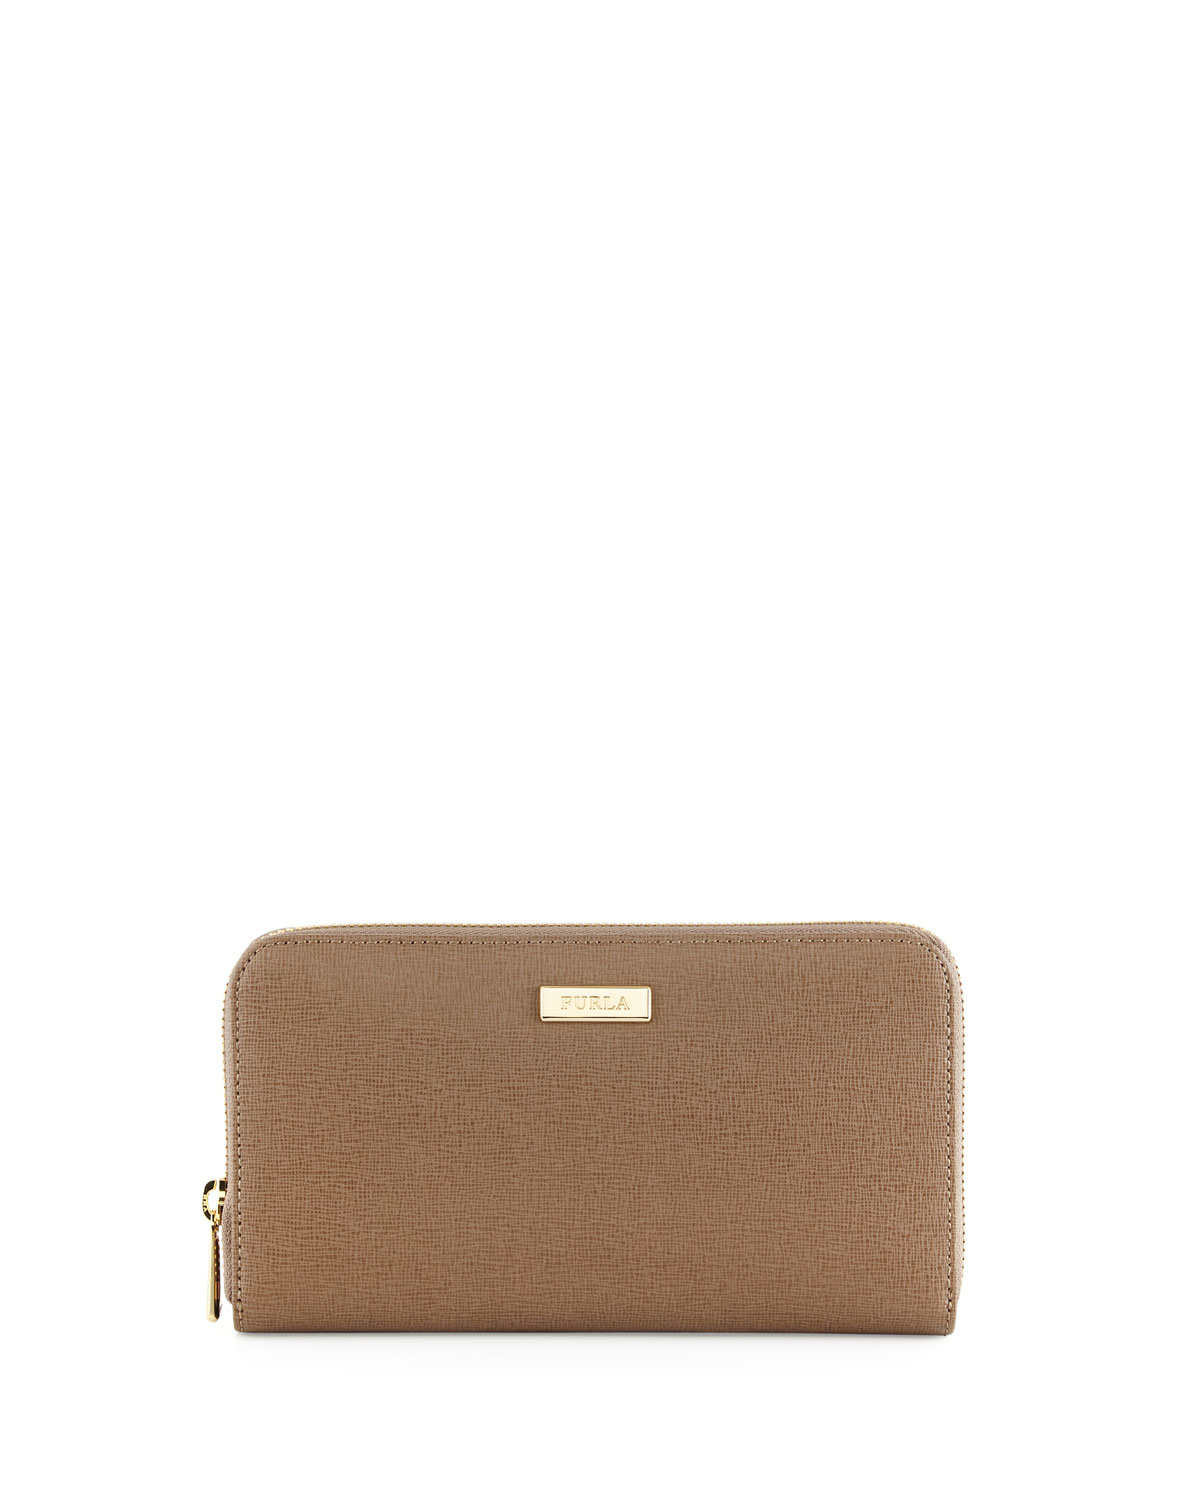 Lyst - Furla Classic Xl Zip-around Leather Wallet in Brown